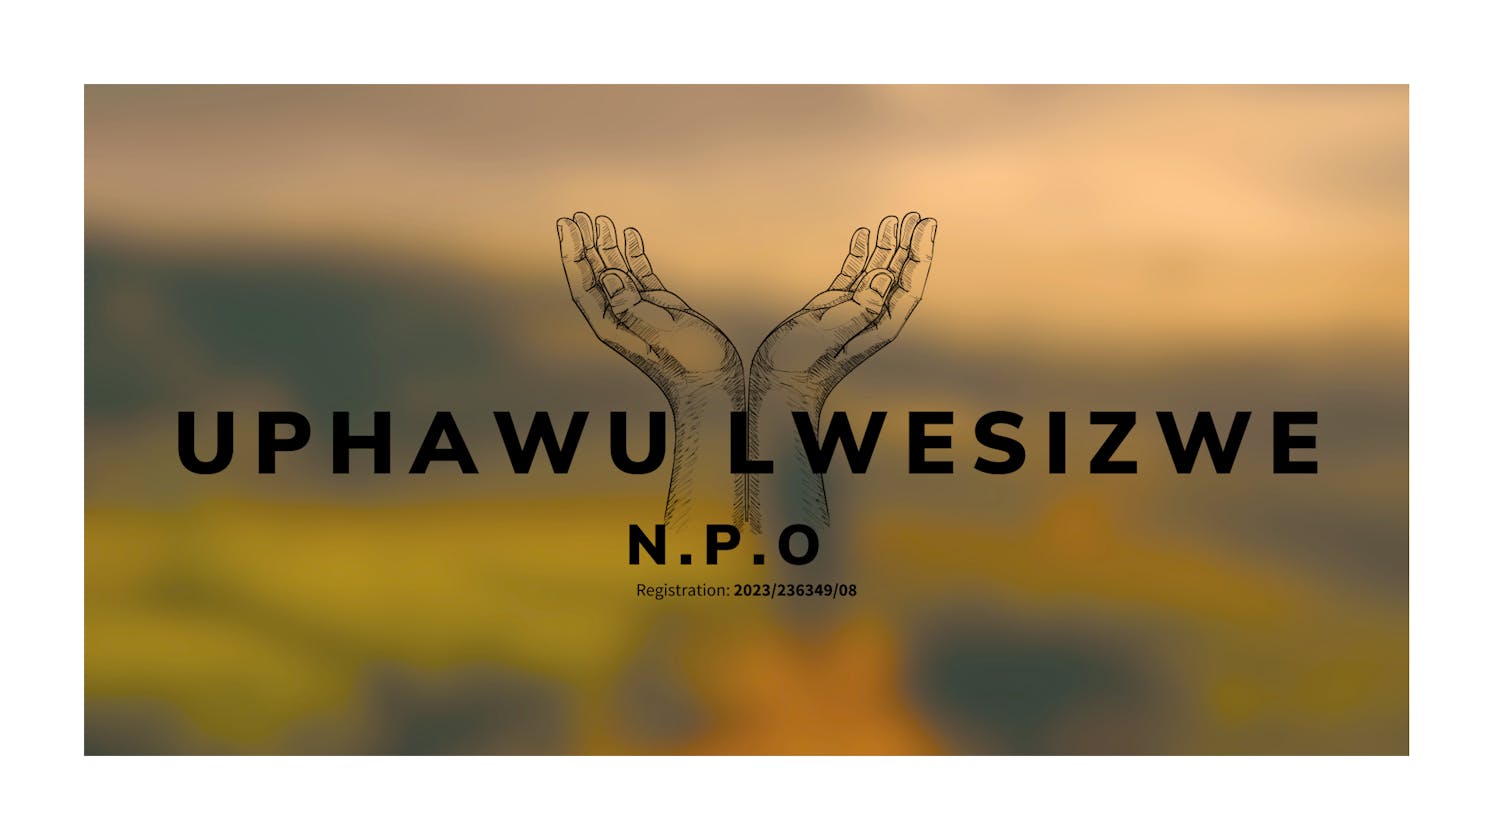 Empowering Communities Through Technical Innovation: The Uphawu Lwesizwe Project